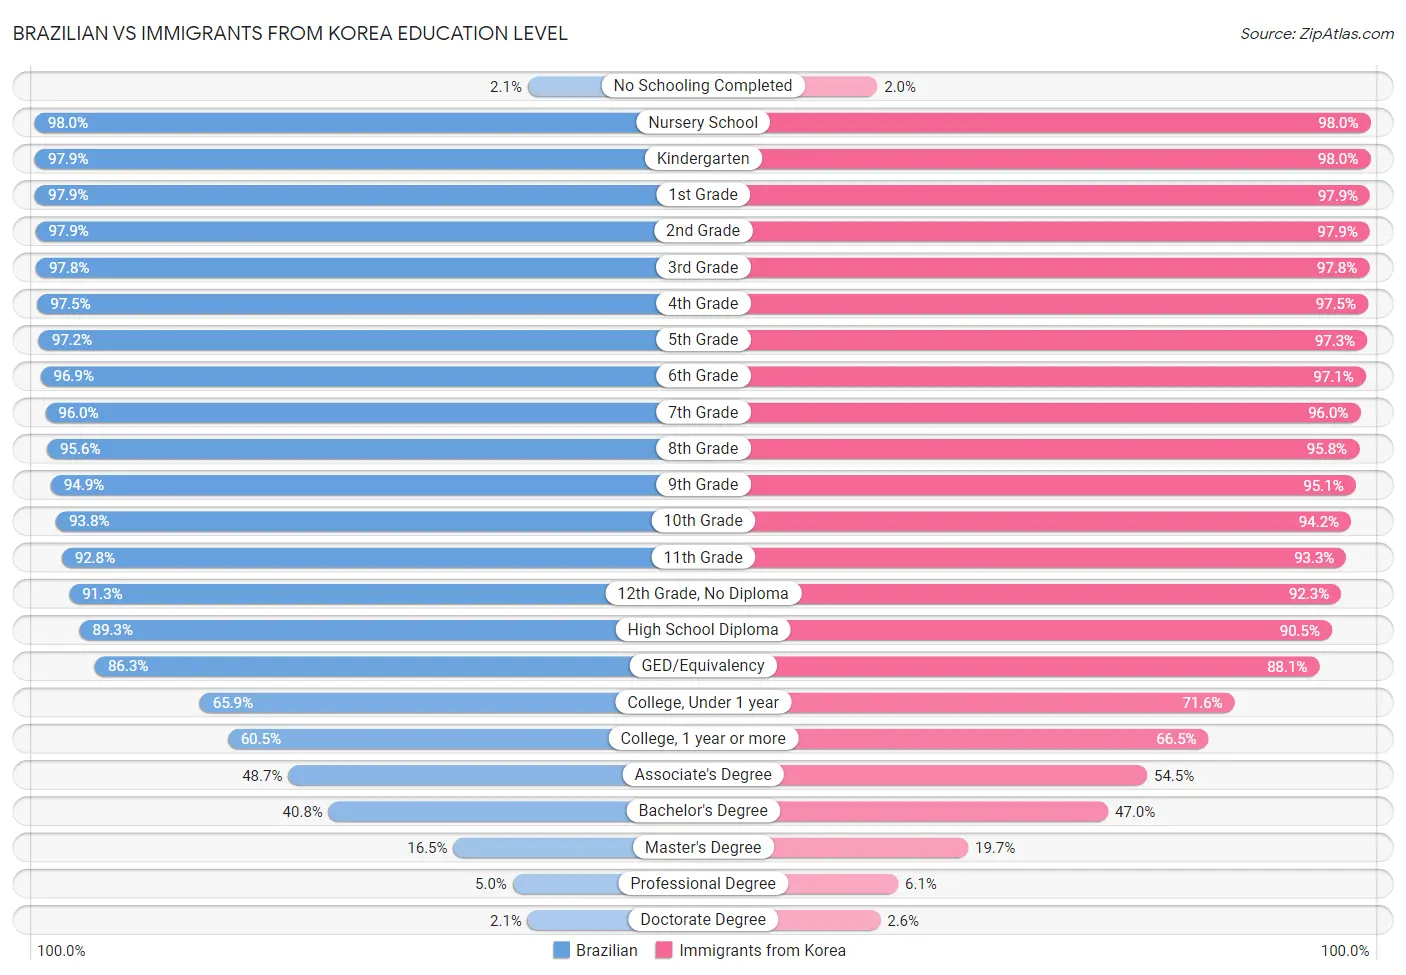 Brazilian vs Immigrants from Korea Education Level